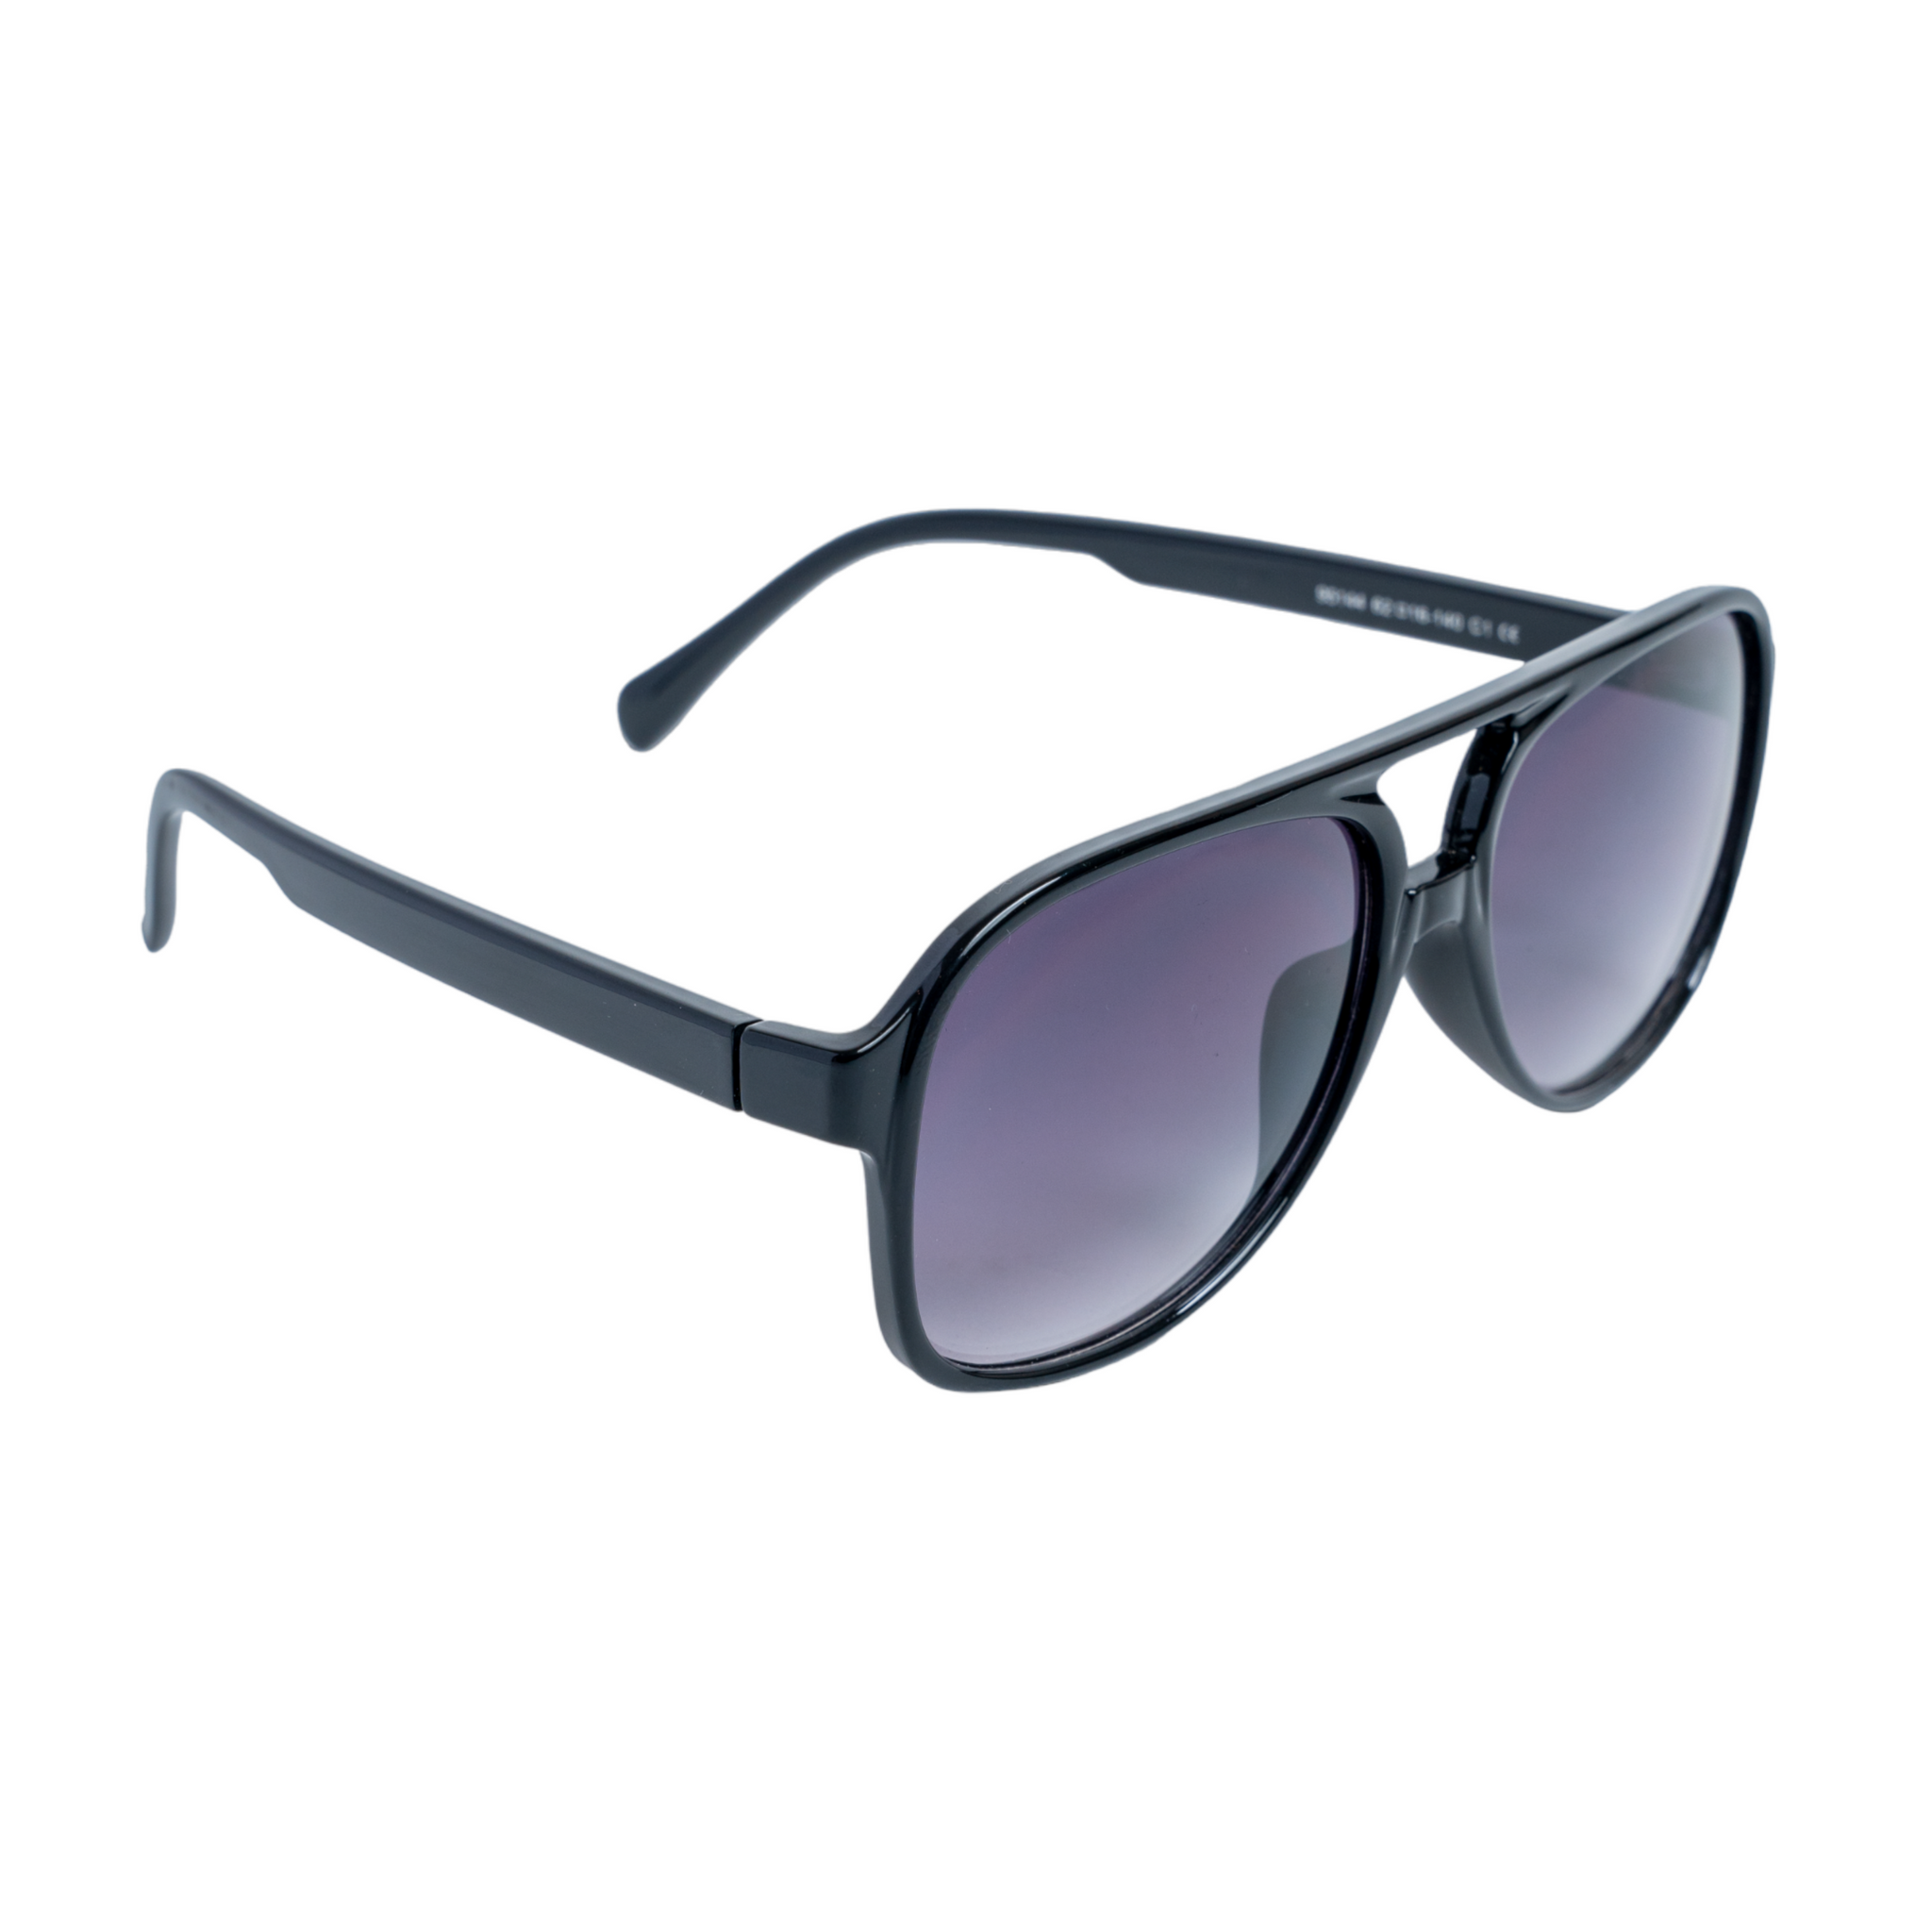 Chokore Round & Retro Polarized Sunglasses (Brown & Black)